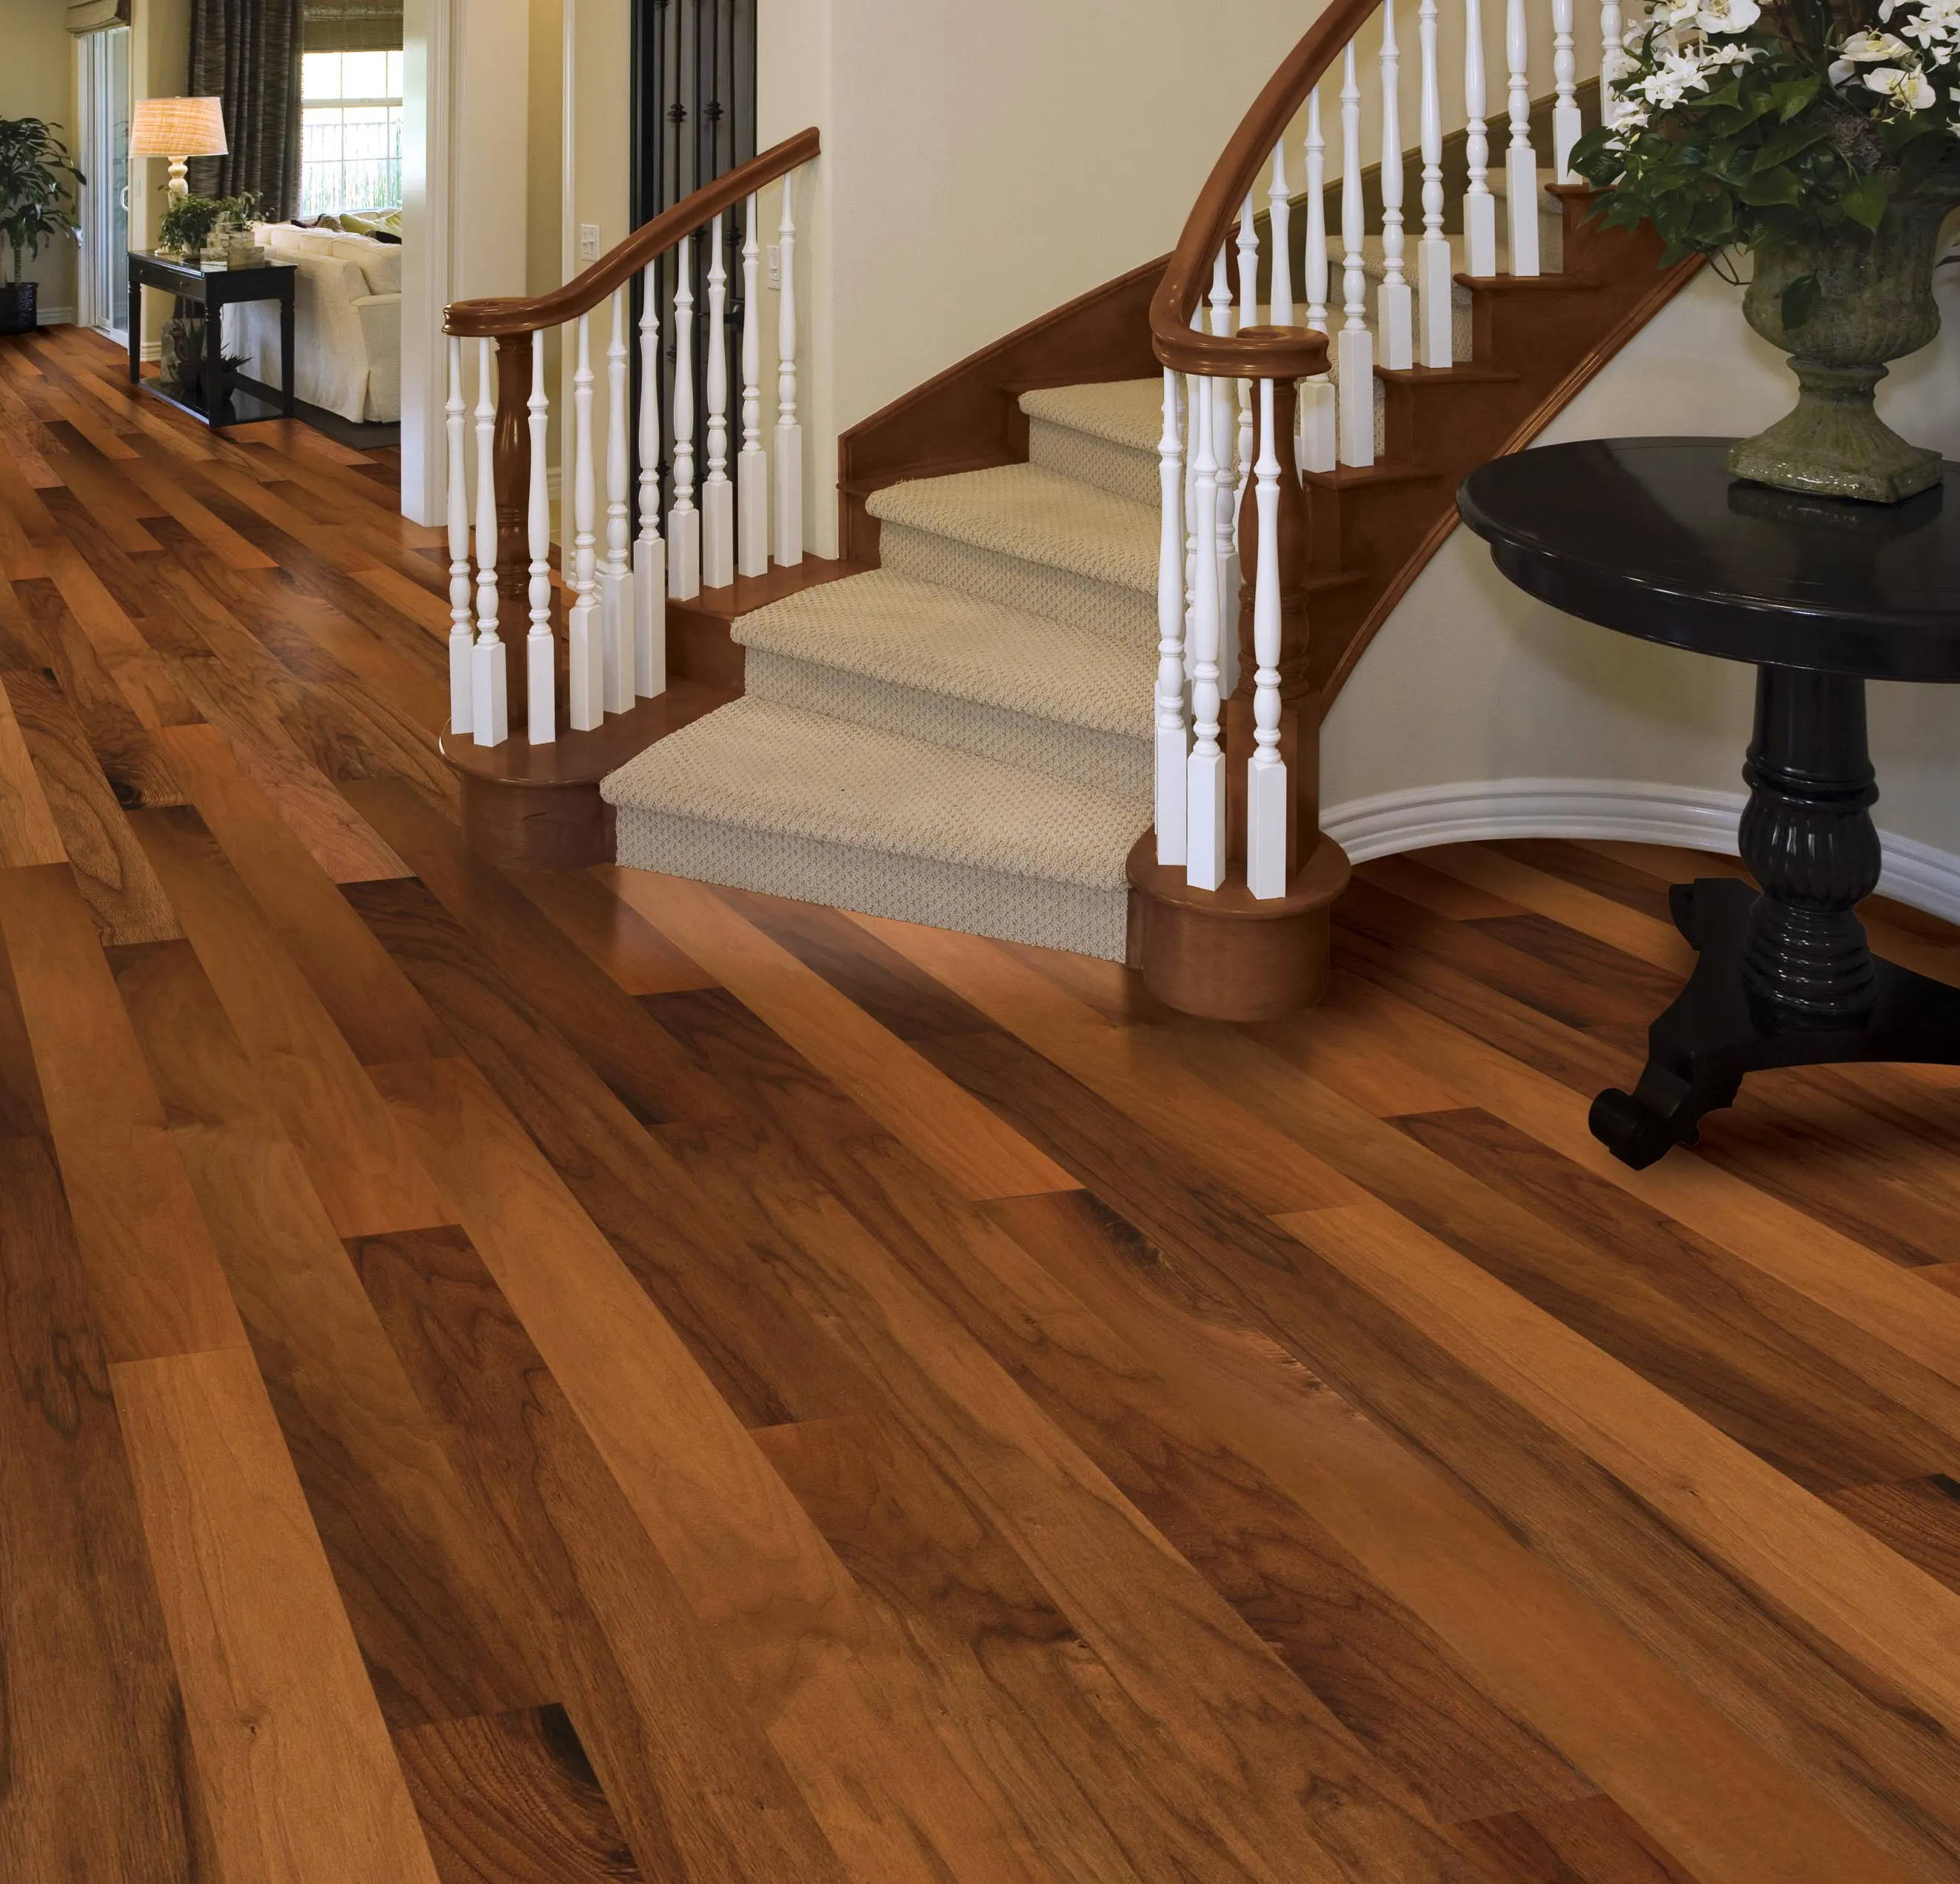 Hardwood Flooring Increase, Pictures Of Hardwood Floors